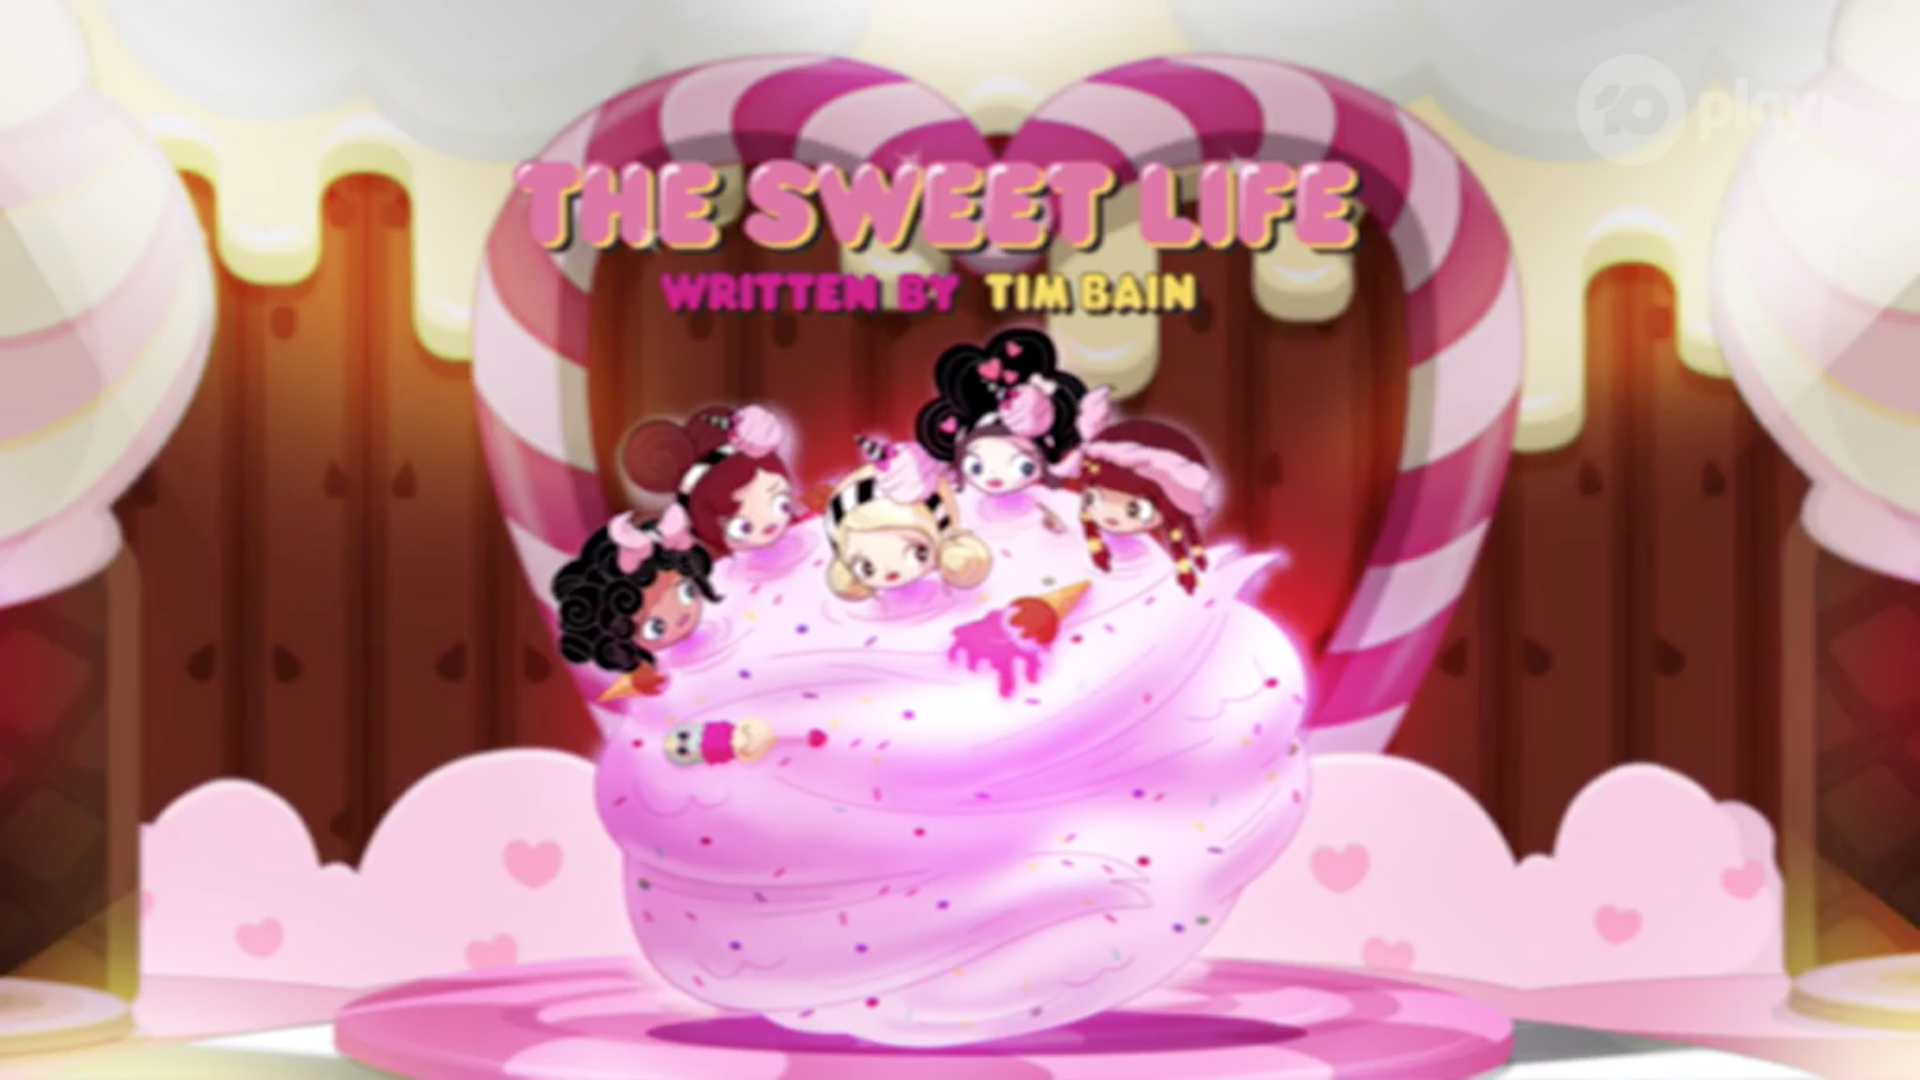 The Sweet Life. Kuu Kuu Harajuku